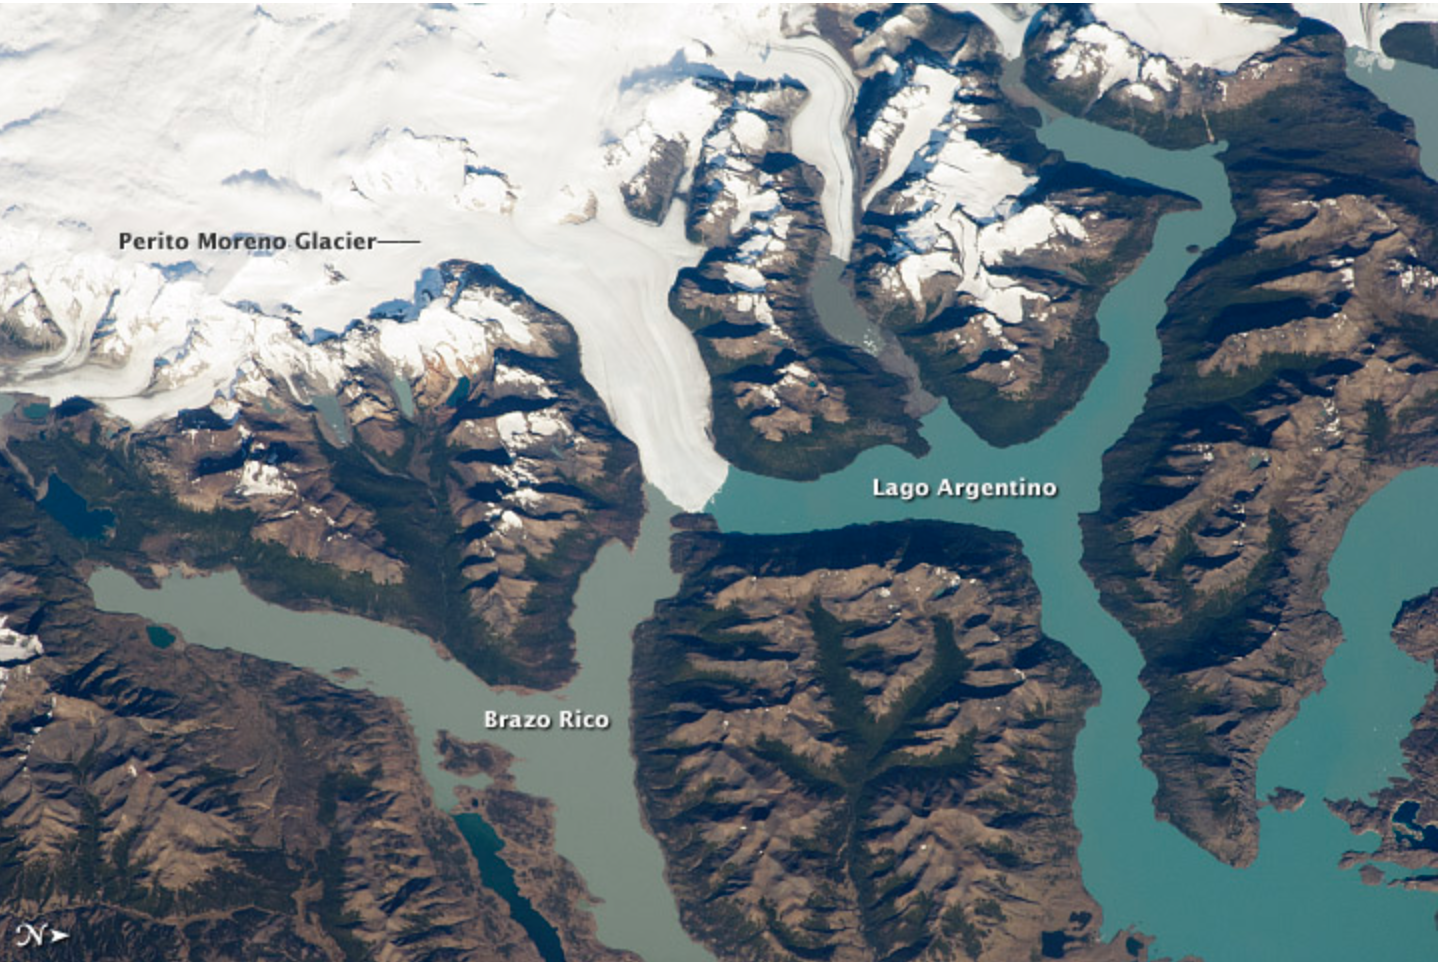 Lake Argentino, Brazo Rico, Patagonia, Argentina